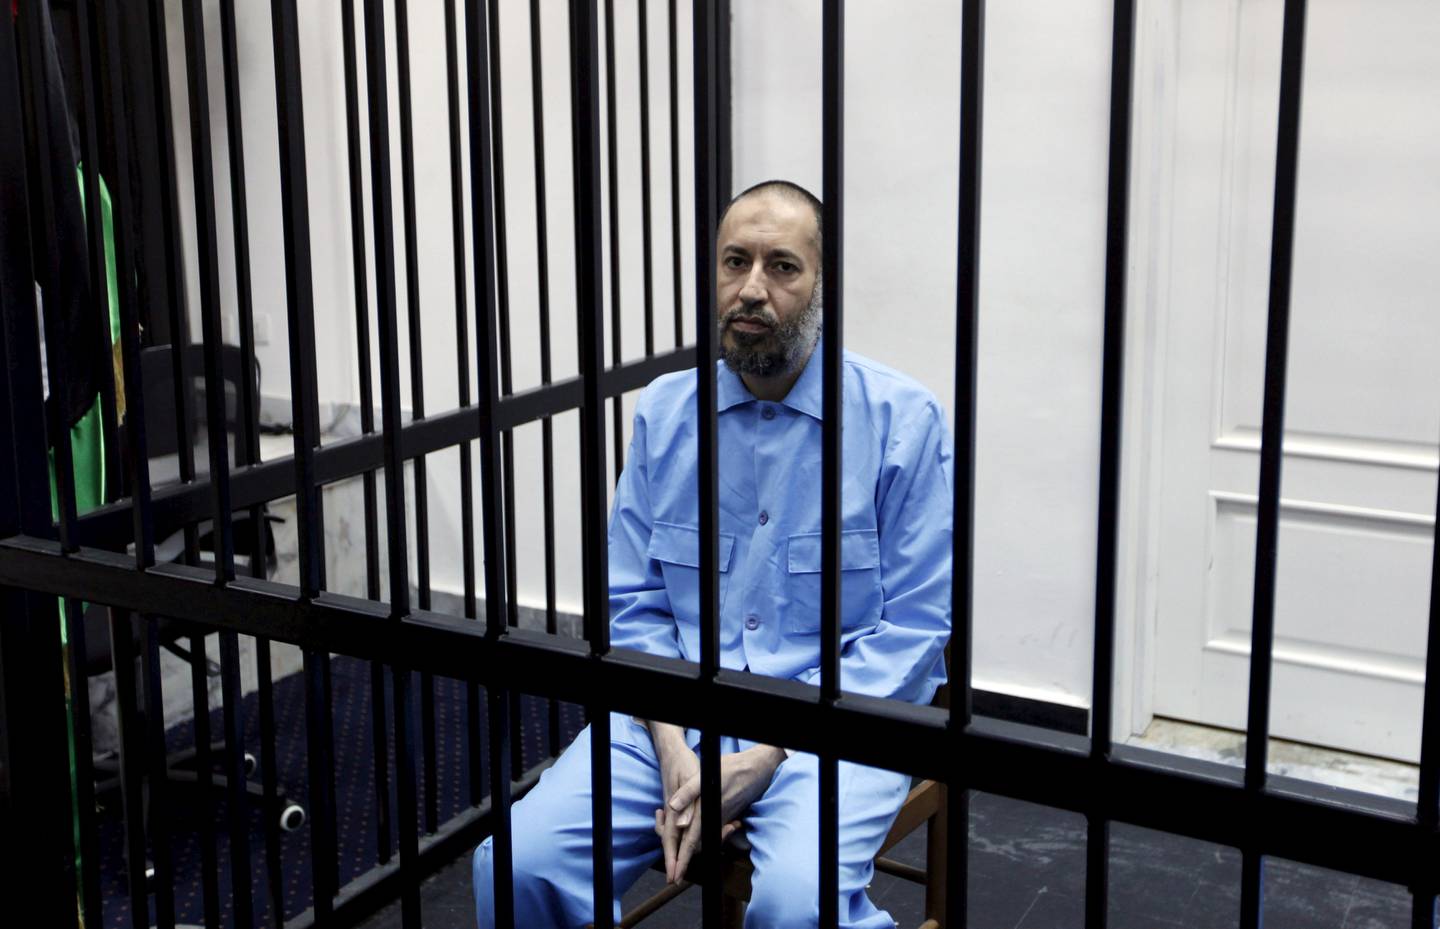 Saadi Gaddafi, son of Muammar Gaddafi, sits behind bars during a hearing at a courtroom in Tripoli in 2016.  Reuters, File 